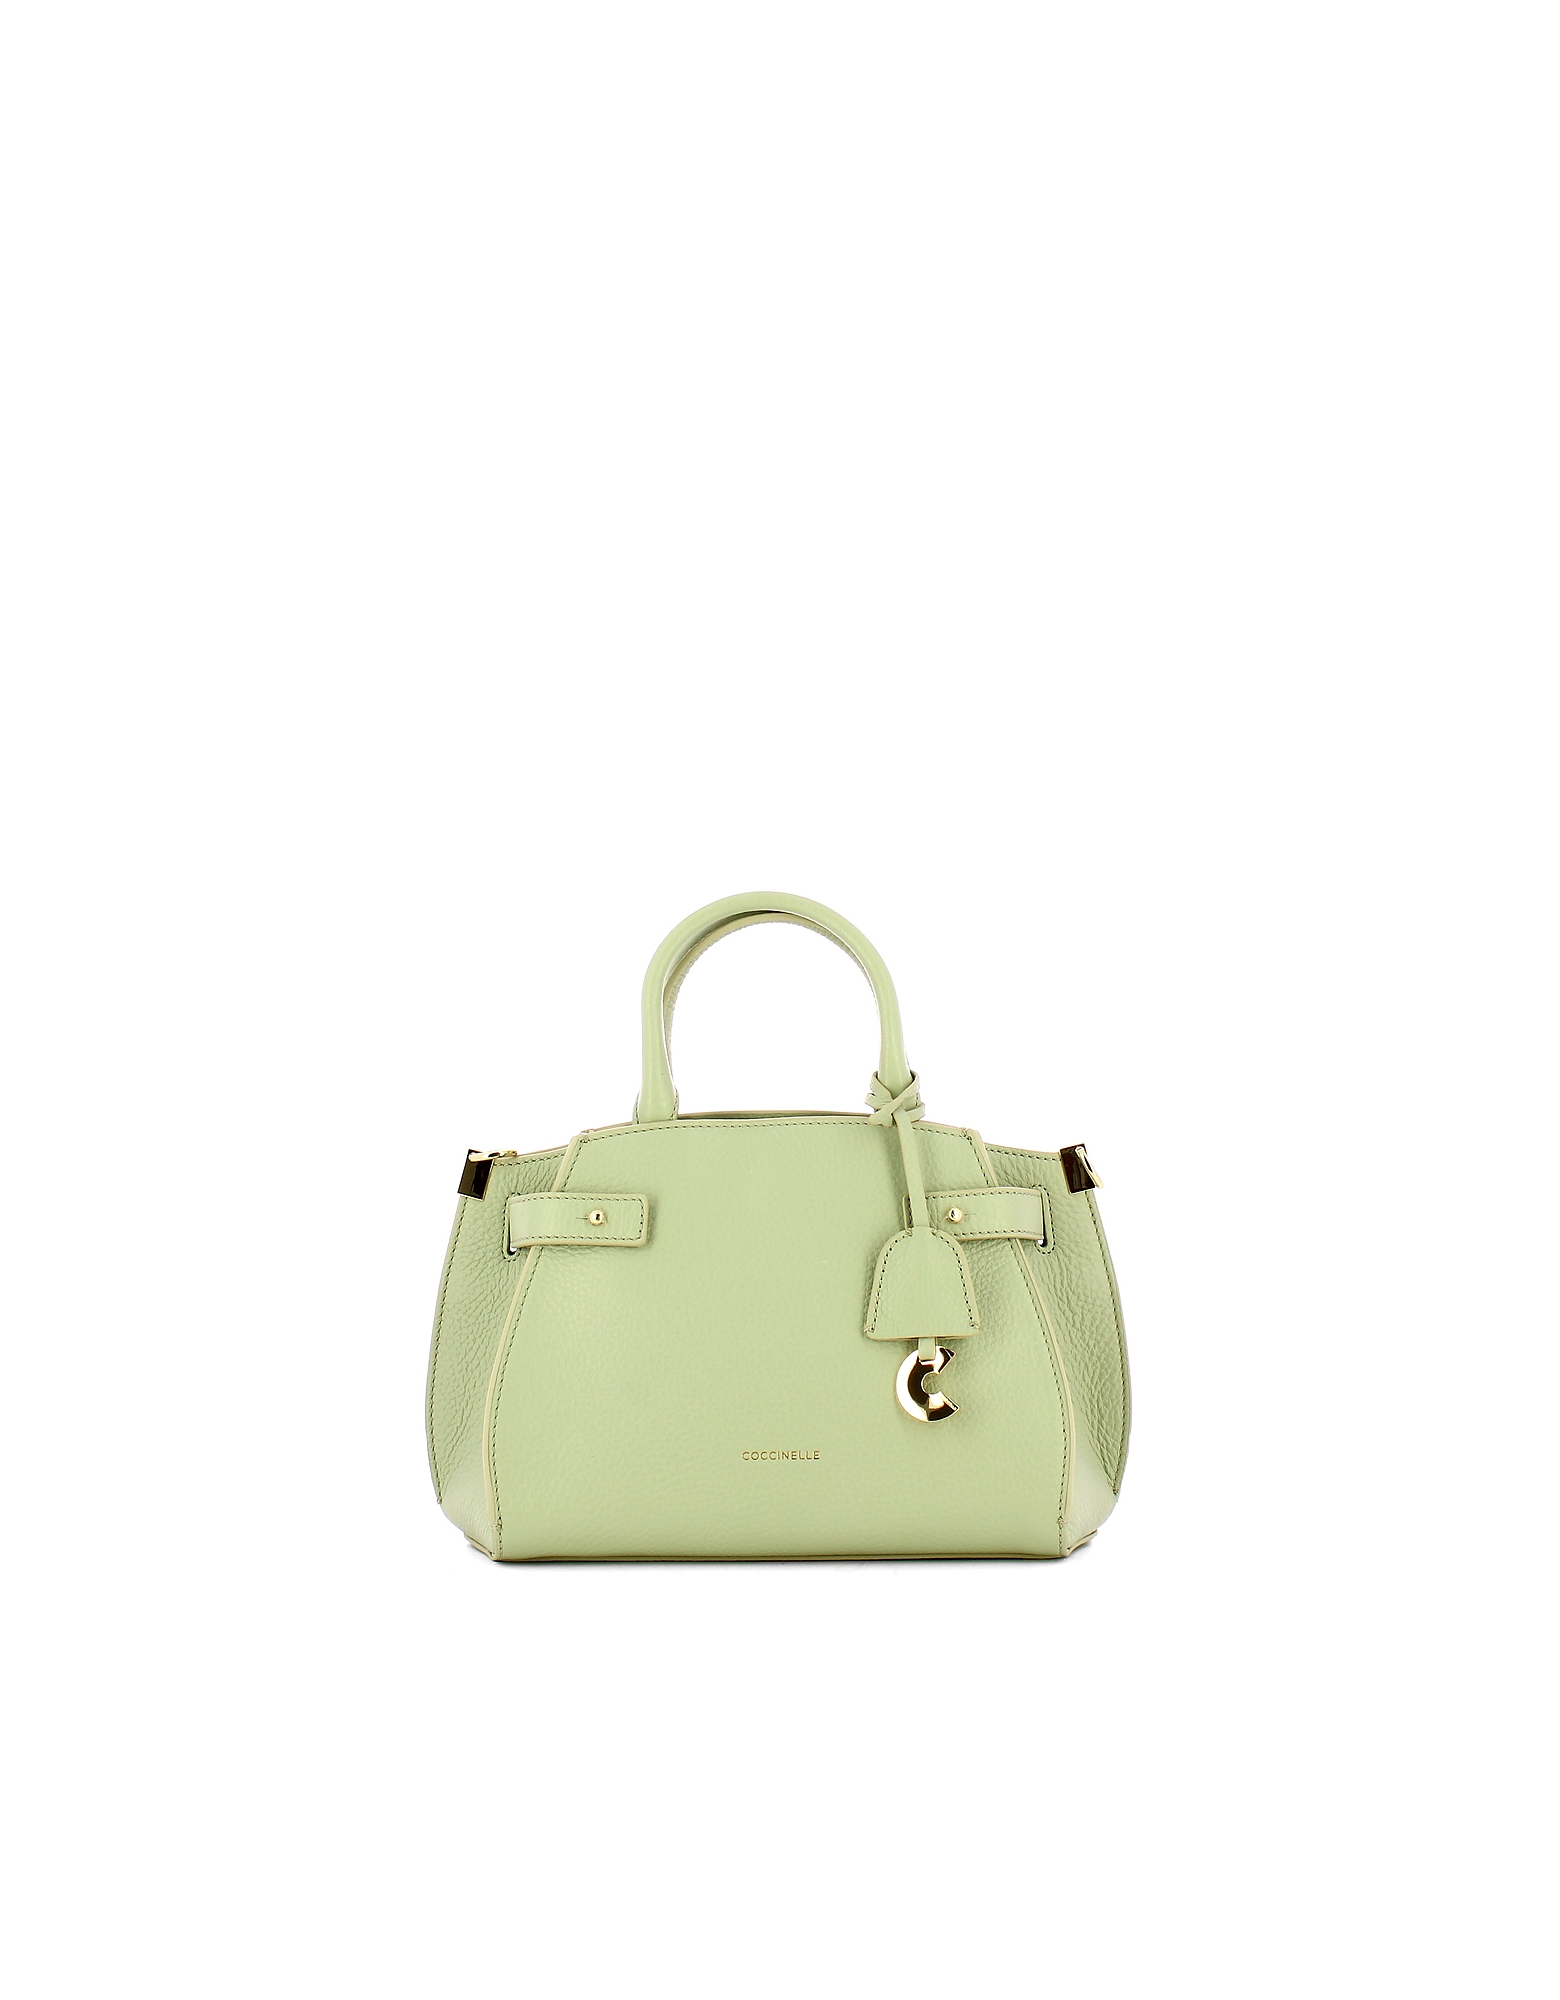 Coccinelle Designer Handbags Women's Green Bag